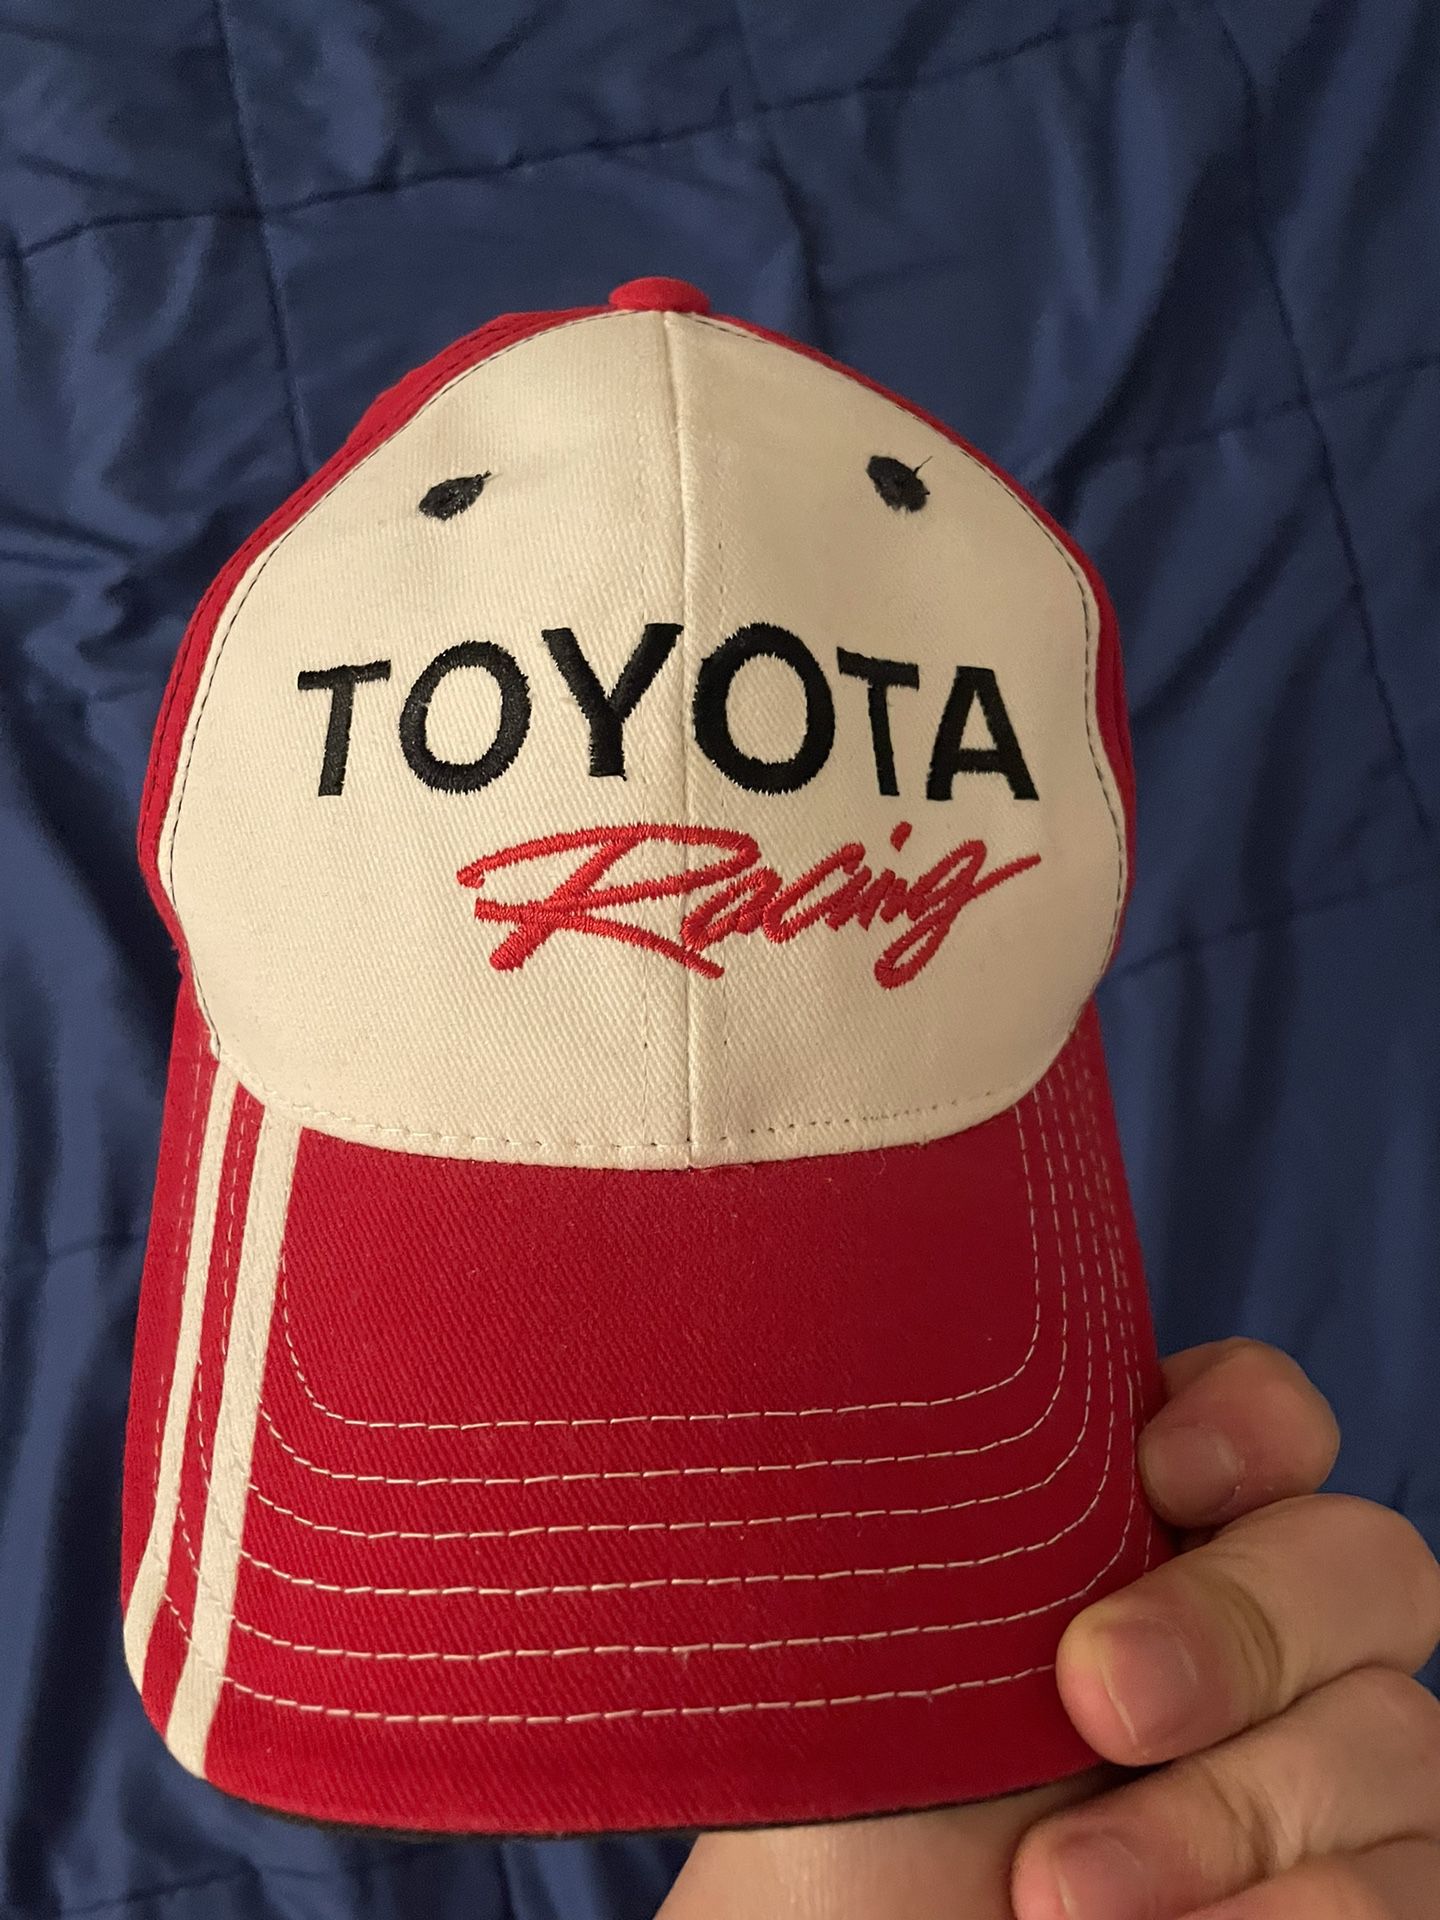 Vintage Toyota racing hat for Sale in Garden Grove, CA - OfferUp